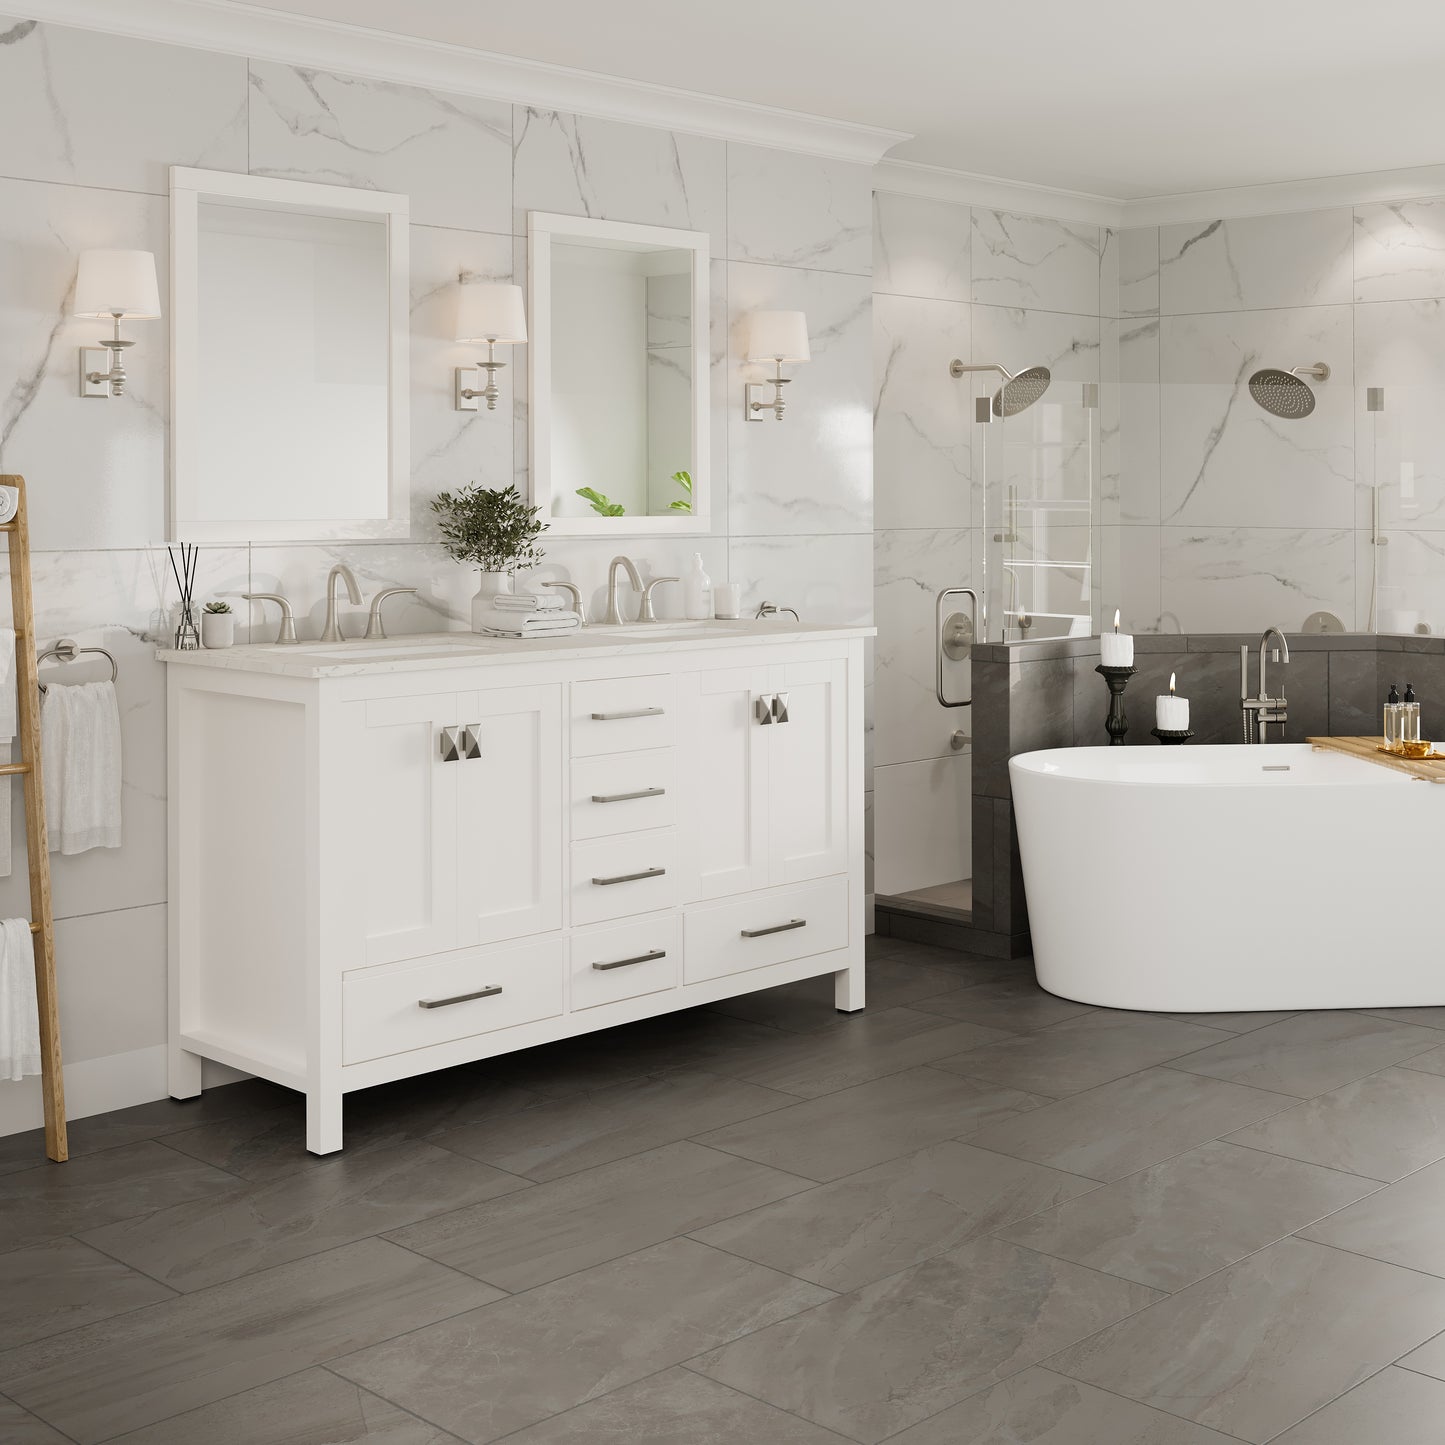 Aberdeen 60"W x 22"D White Double Sink Bathroom Vanity with Carrara Quartz Countertop and Undermount Porcelain Sink